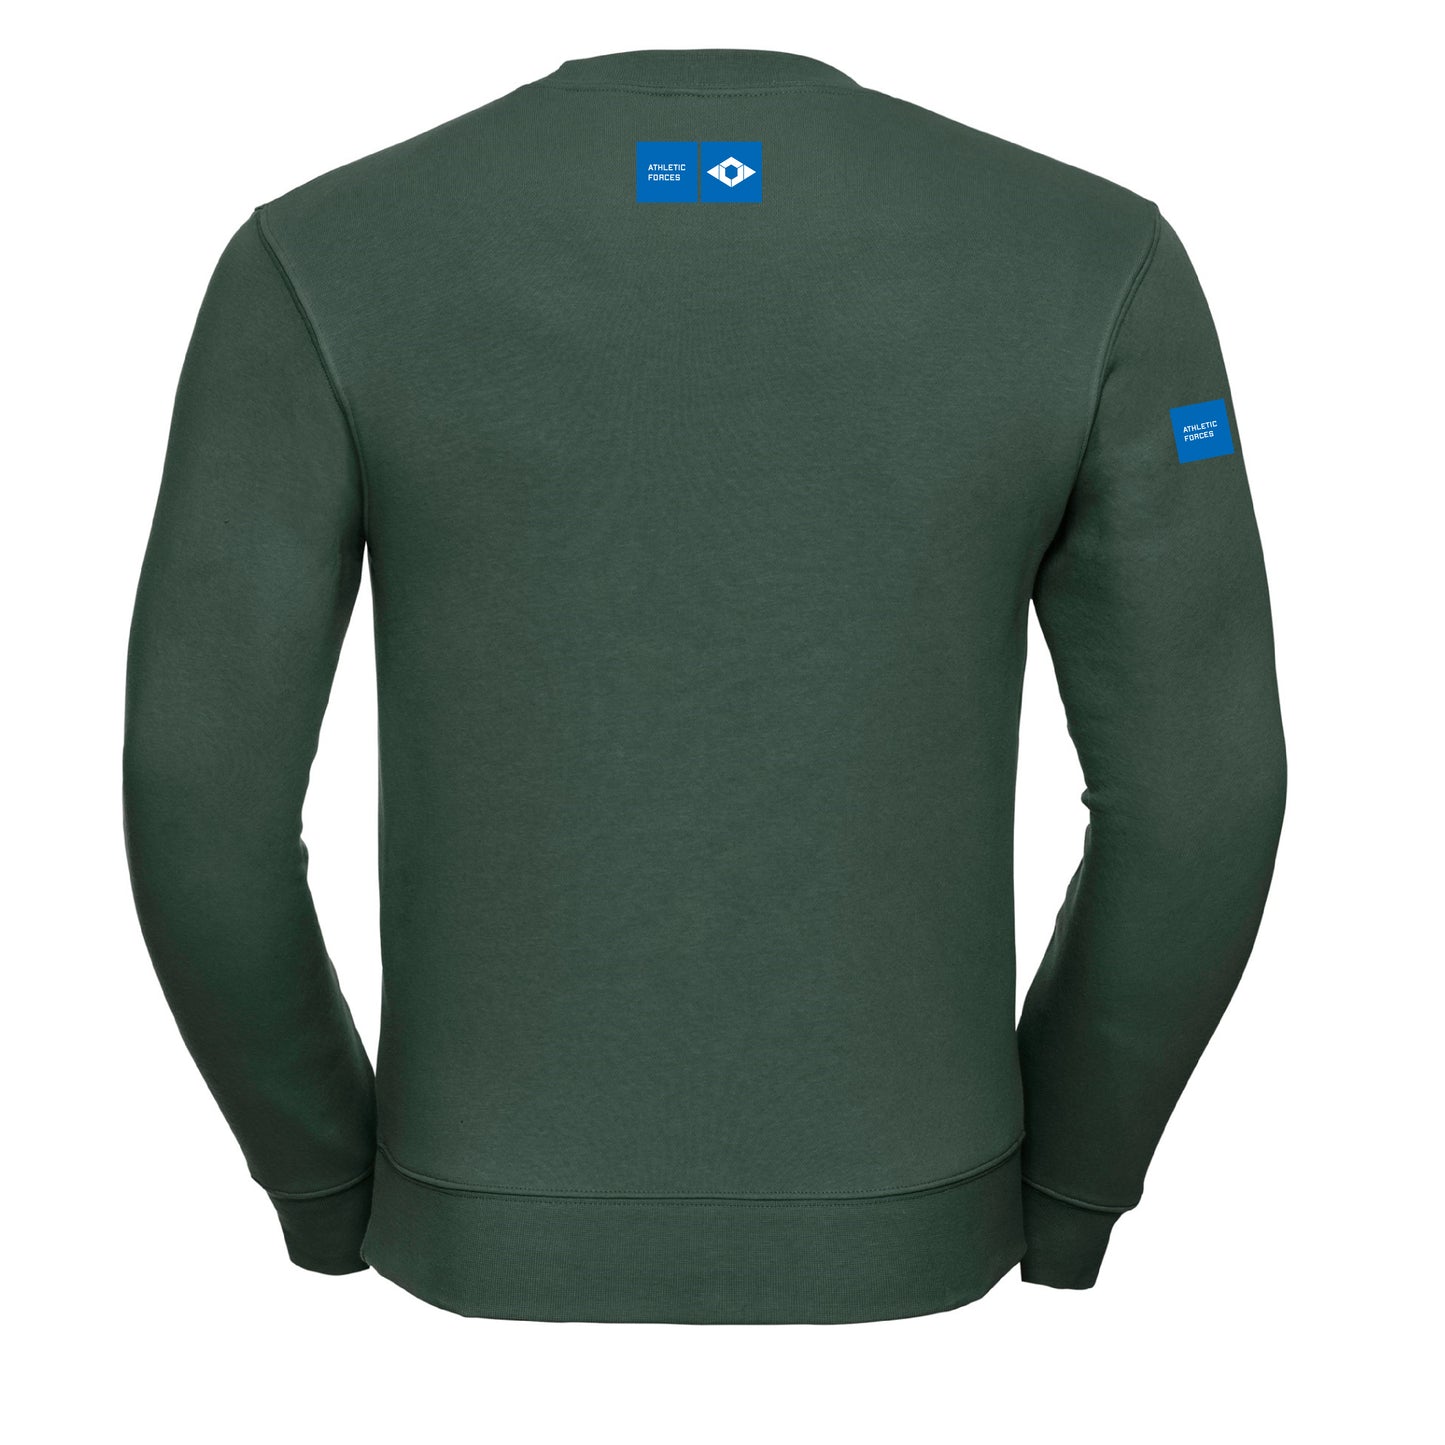 Union of Forces® Sweatshirt